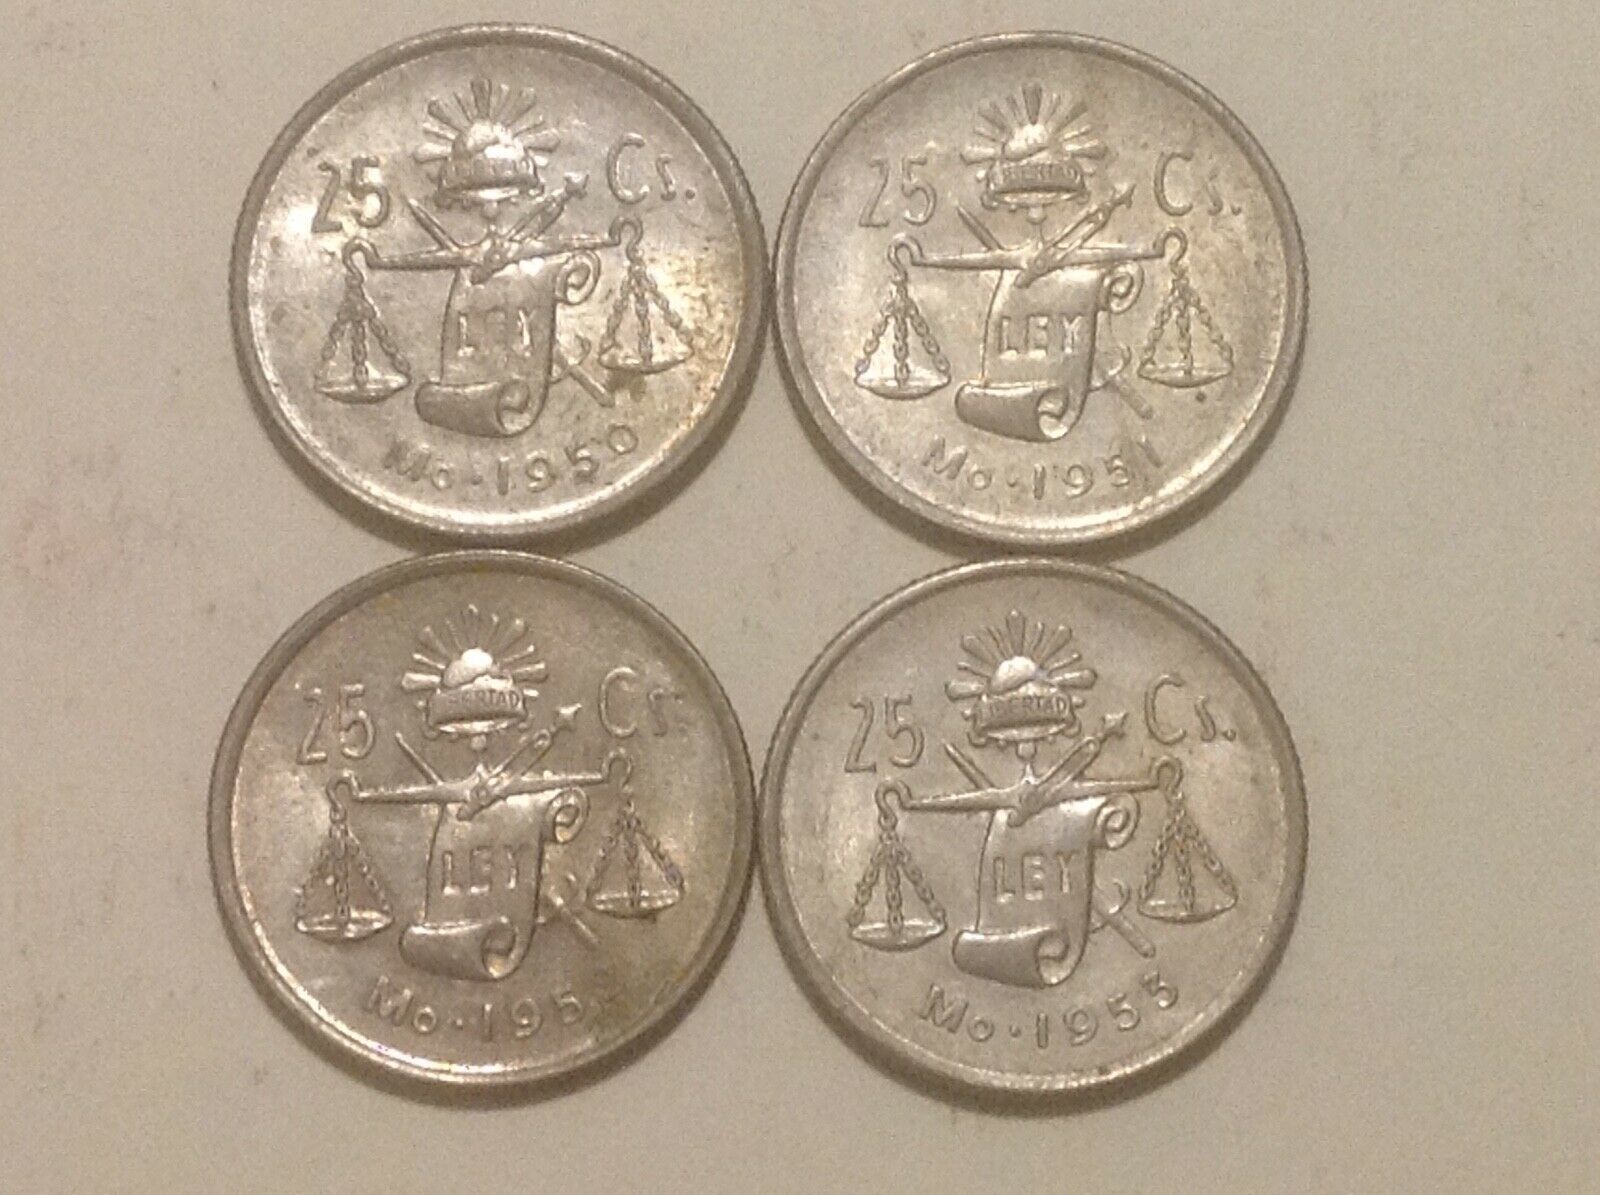 Complete Set Of 4 25 Centavos Coins 1950-1953 Mexico Silver Plata Mexican